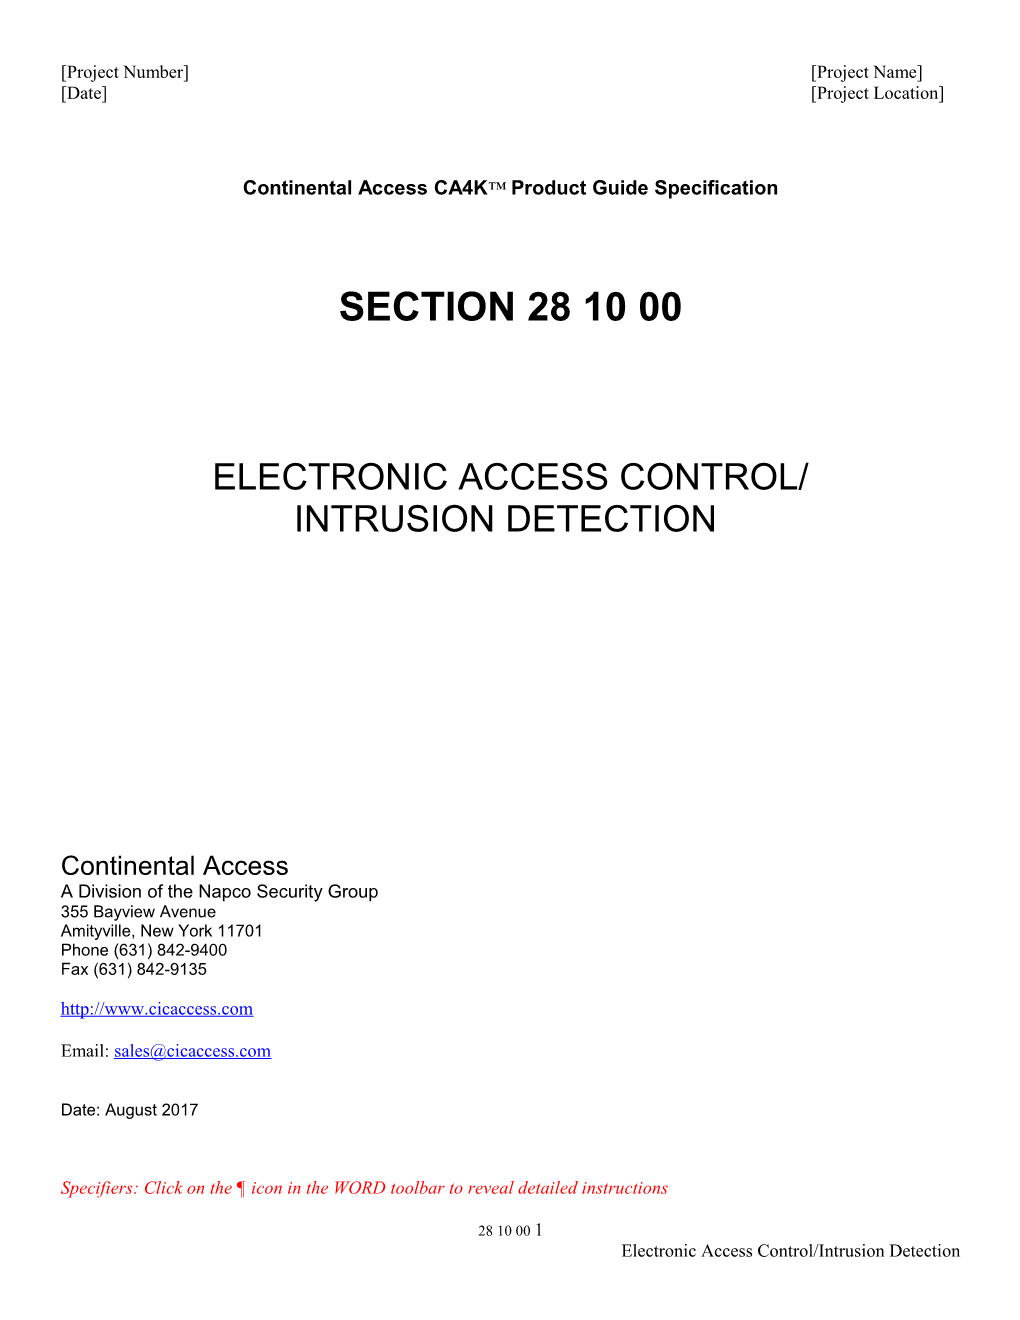 CSI 28 10 00 Specification Guide